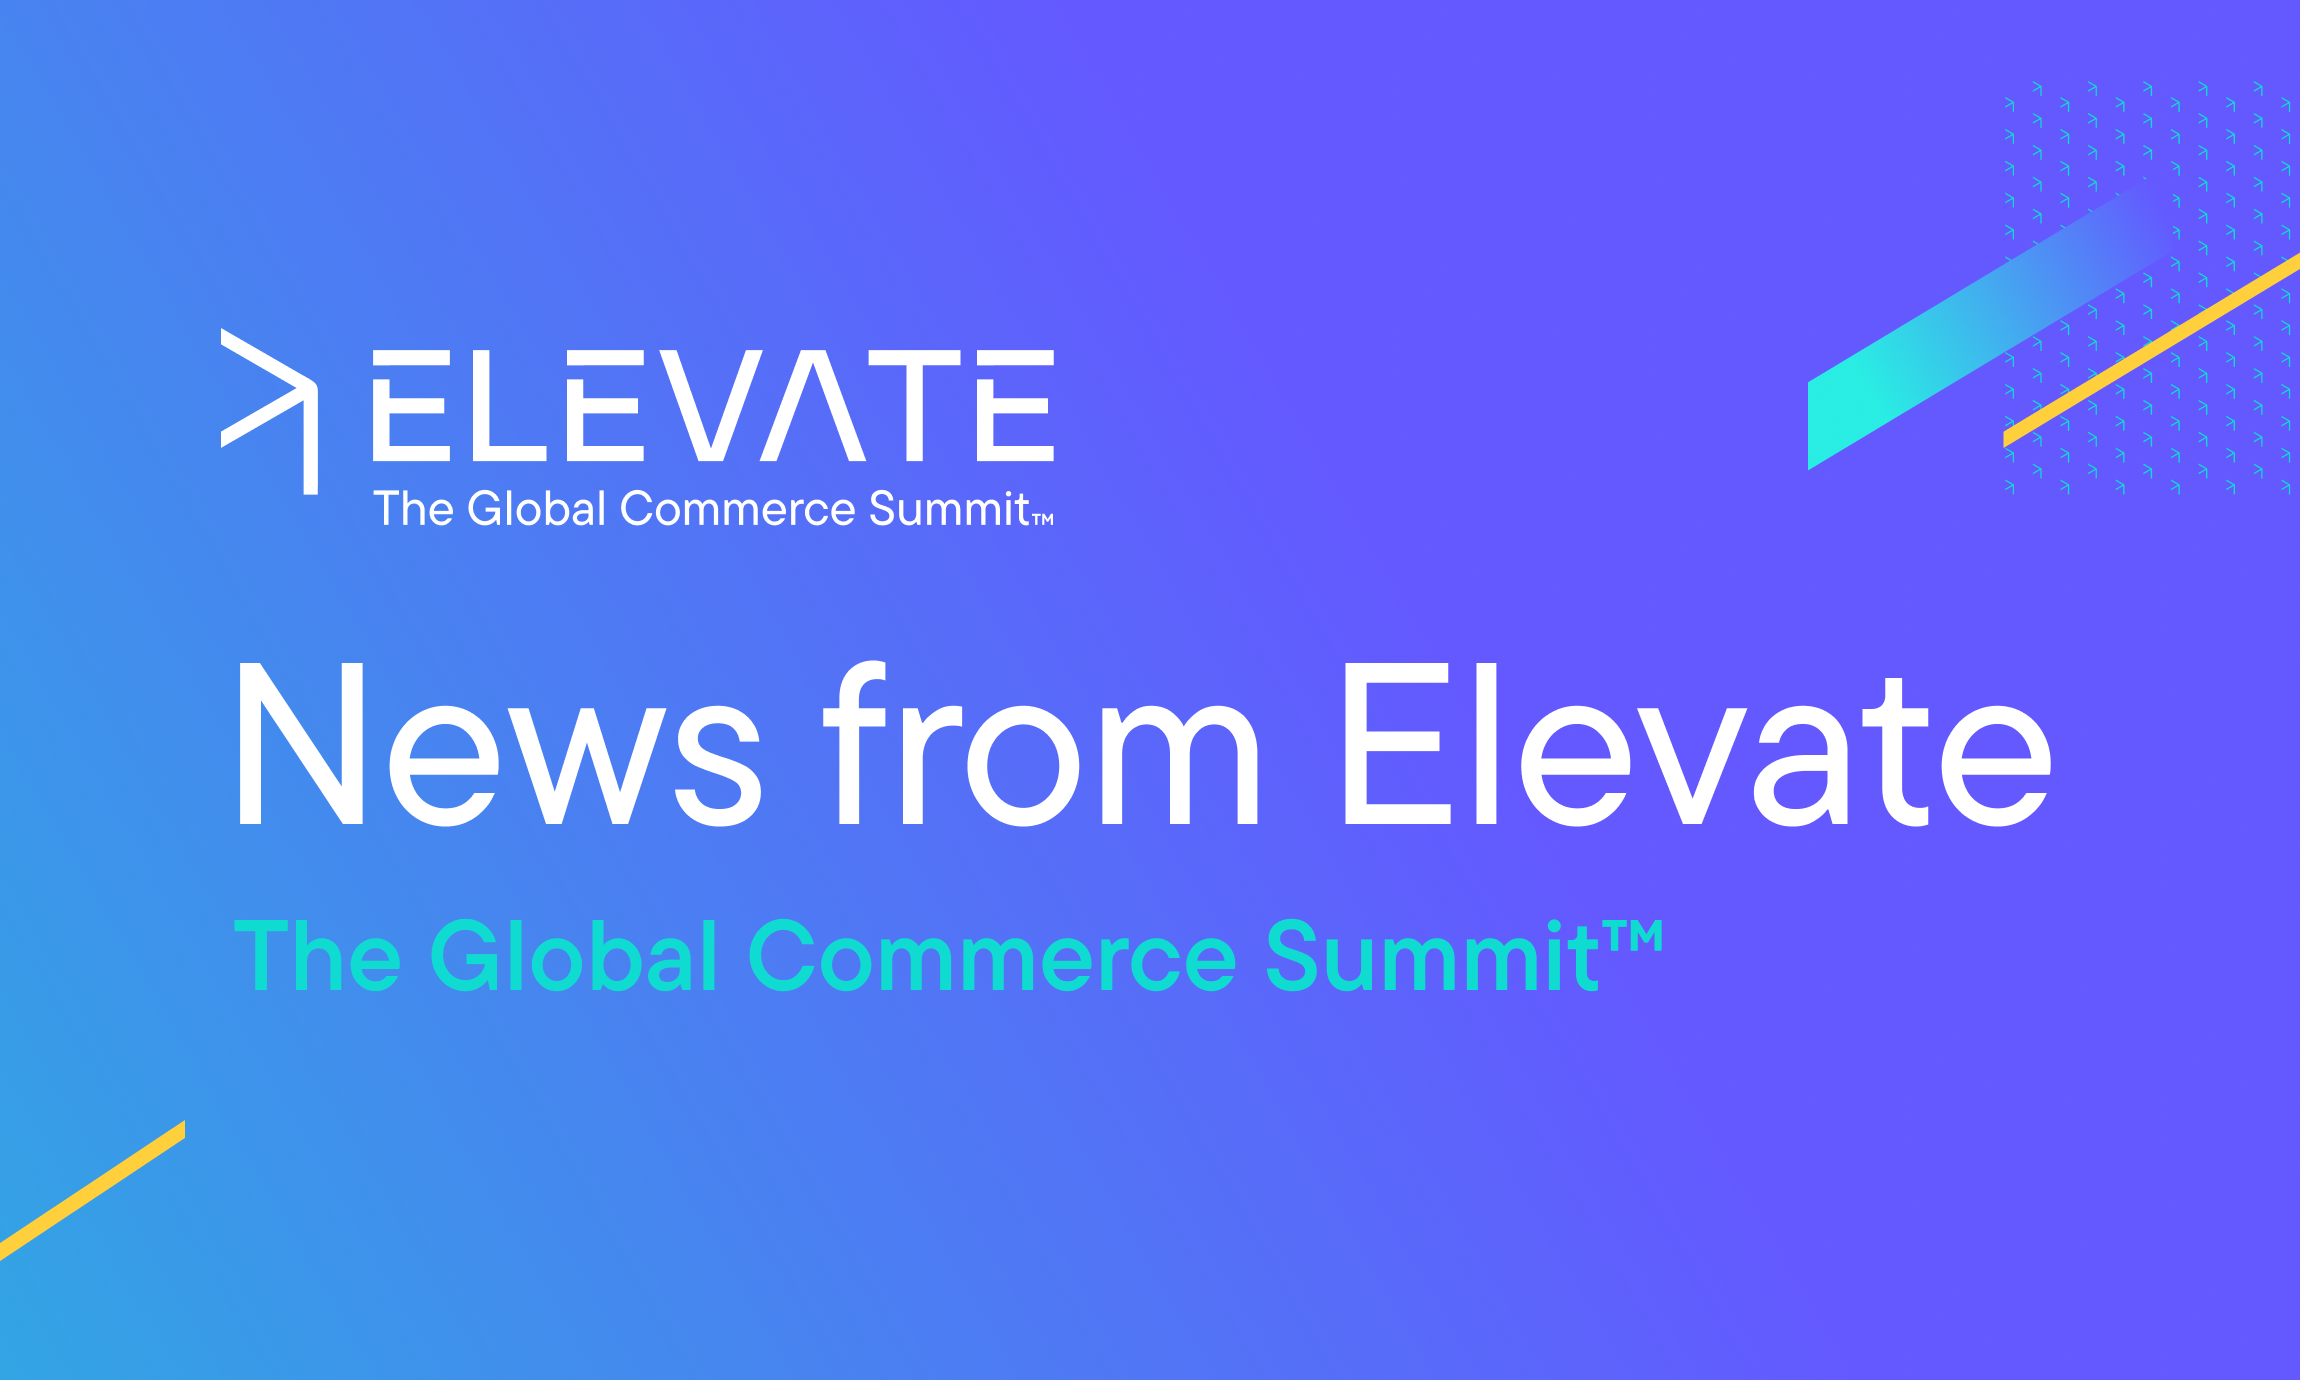 commercetools Ignites Commerce Innovation at Inaugural Elevate - The Global Commerce Summit